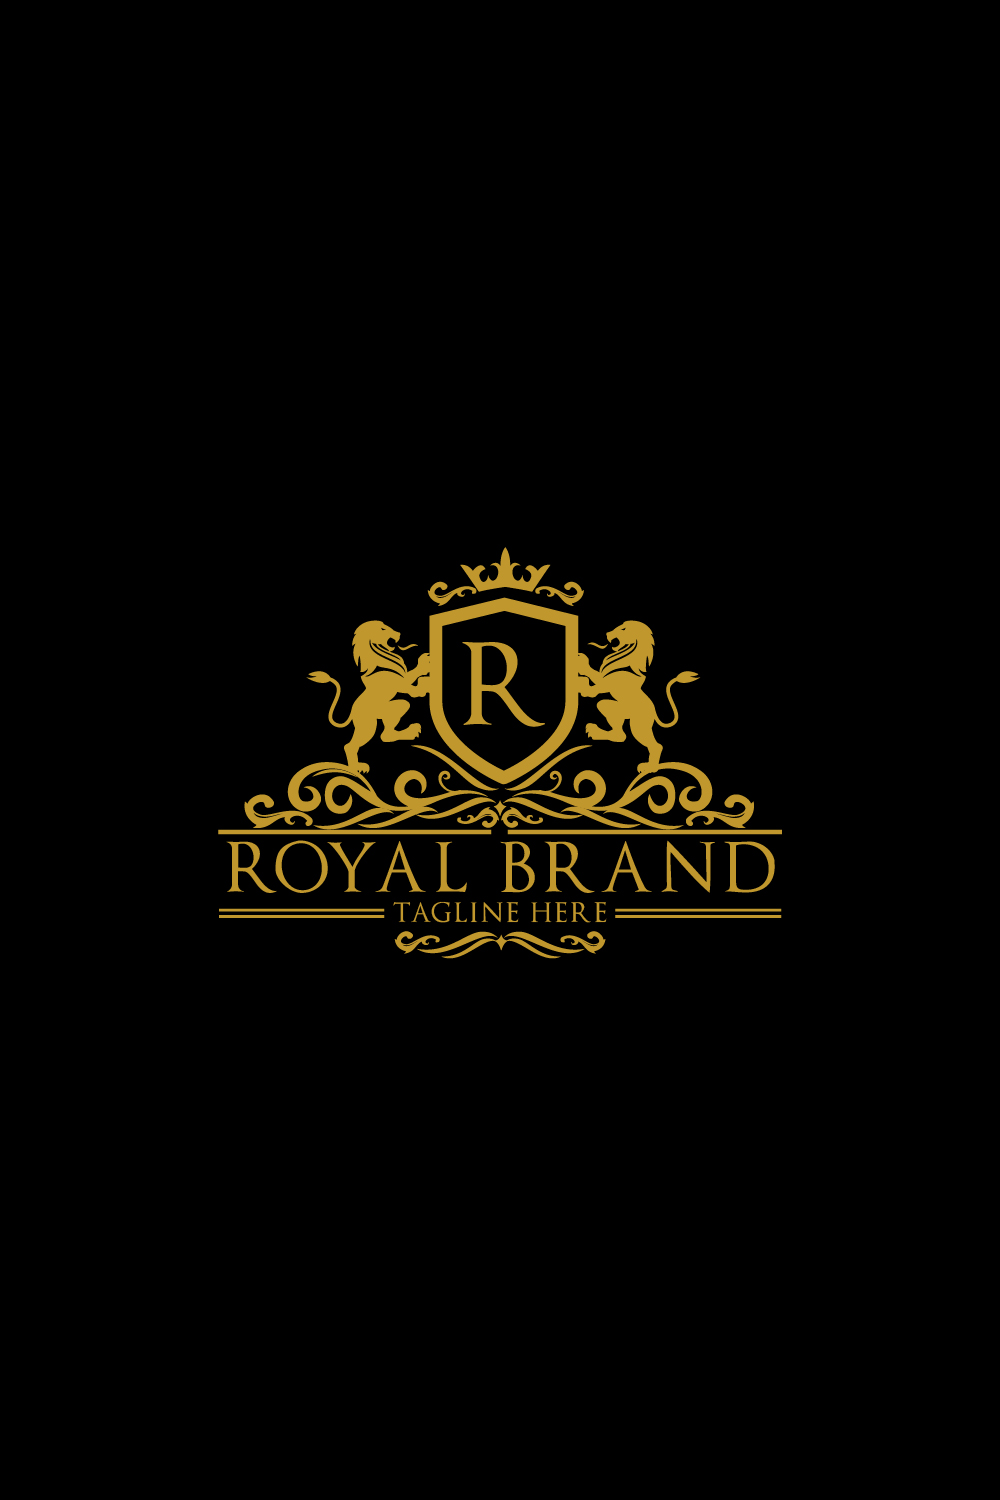 Royal Lion Badges Heraldic Logos pinterest preview image.